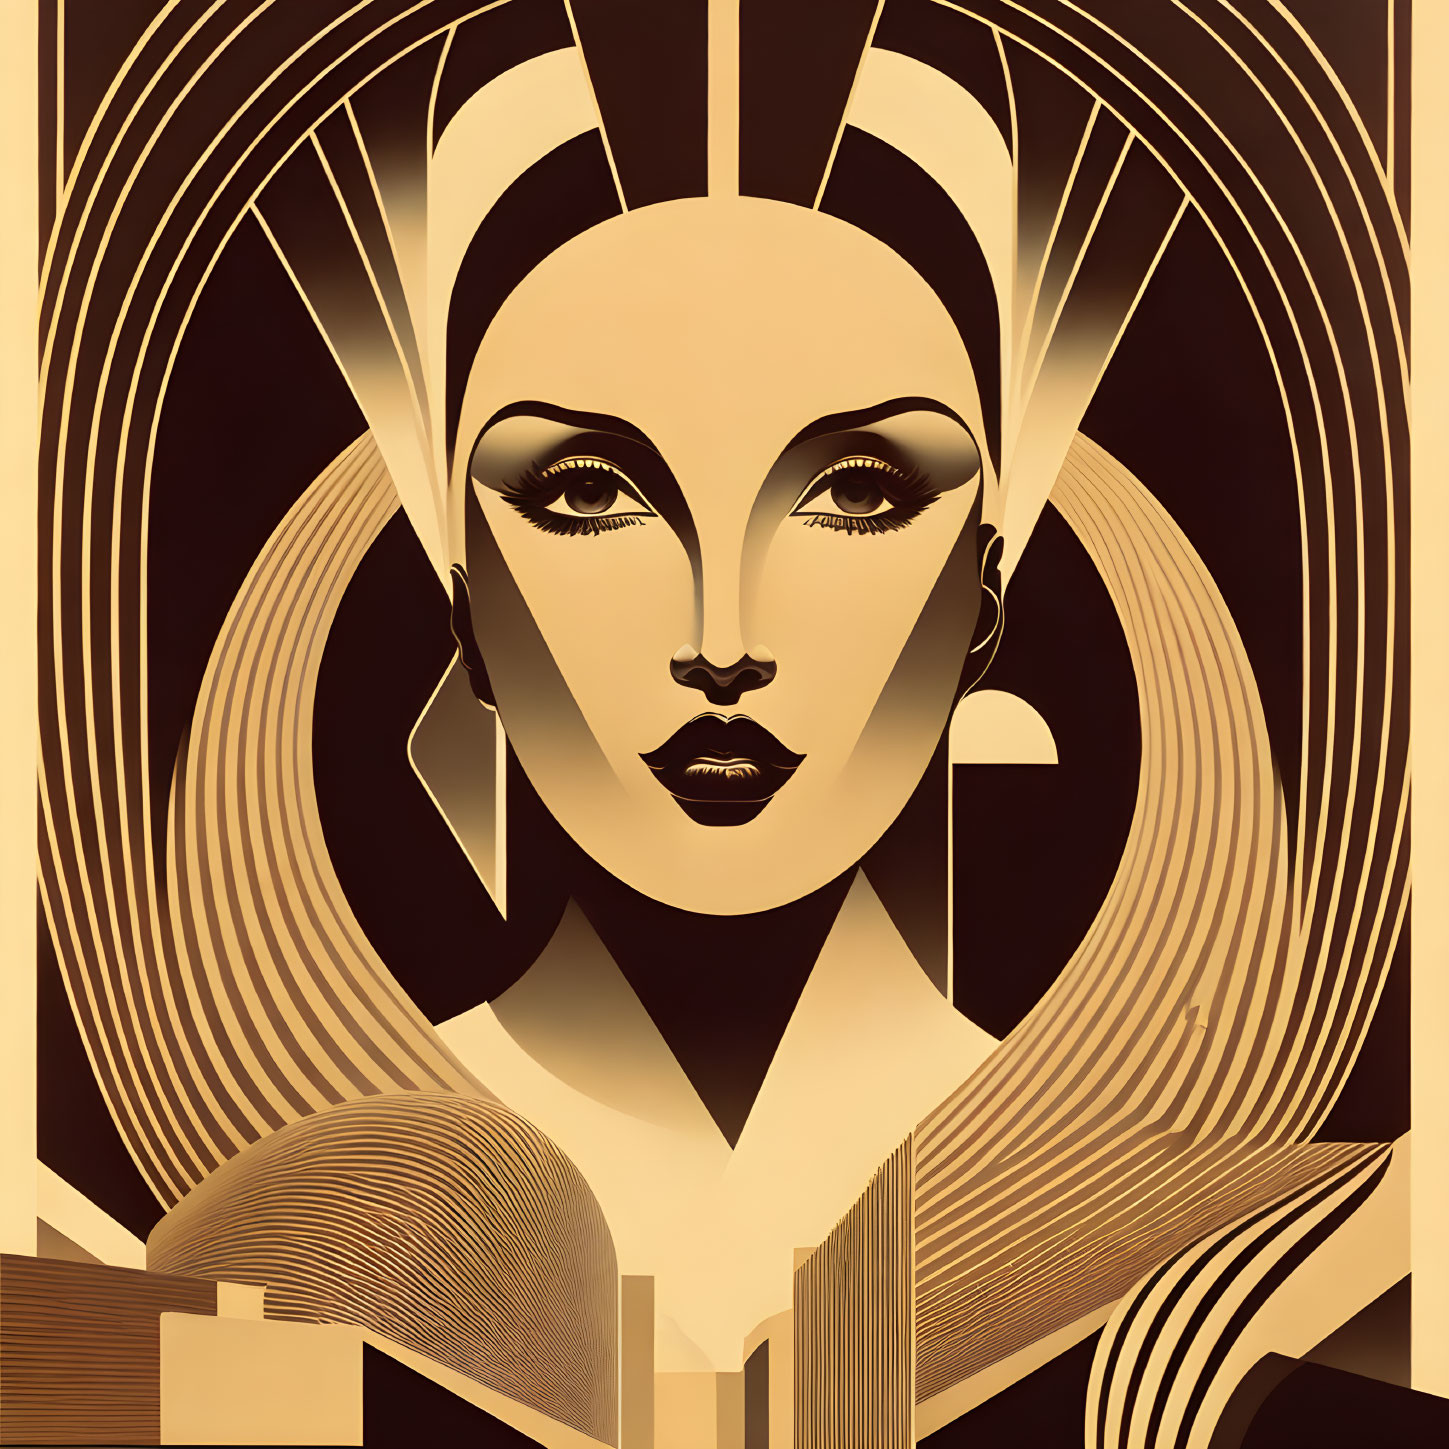 Symmetrical Art Deco Female Face with Geometric Patterns